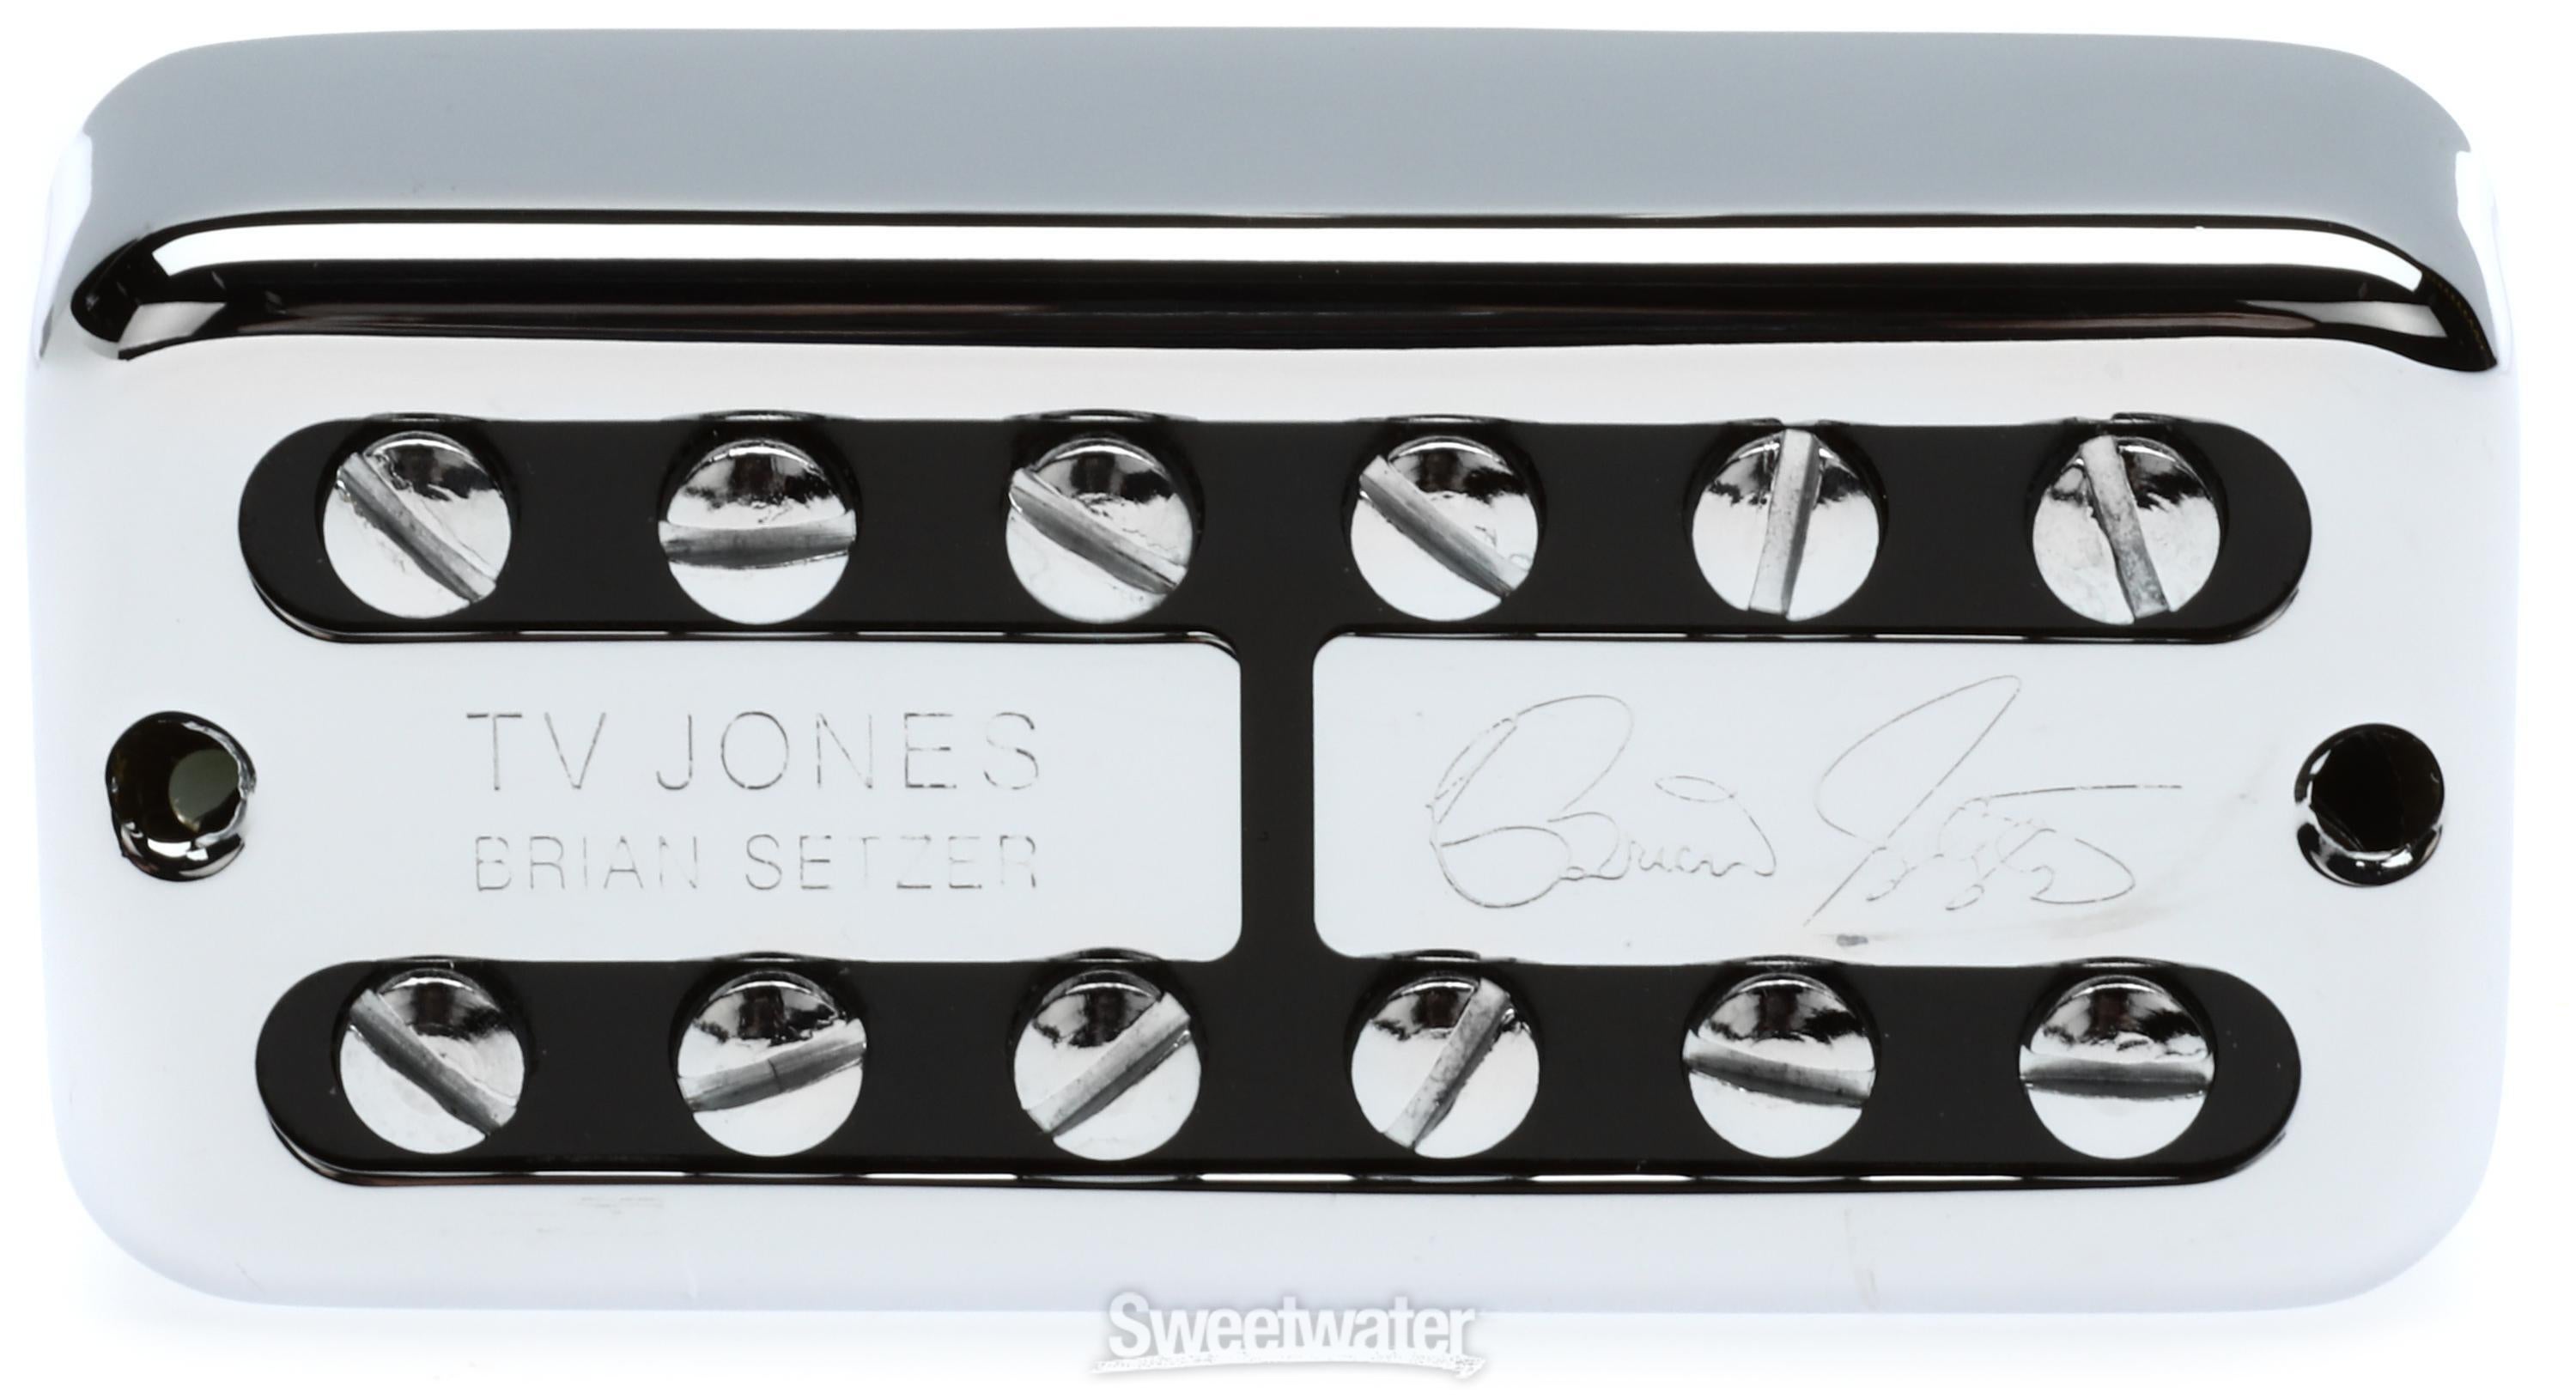 TV Jones Brian Setzer Neck Signature Humbucker Pickup - Chrome